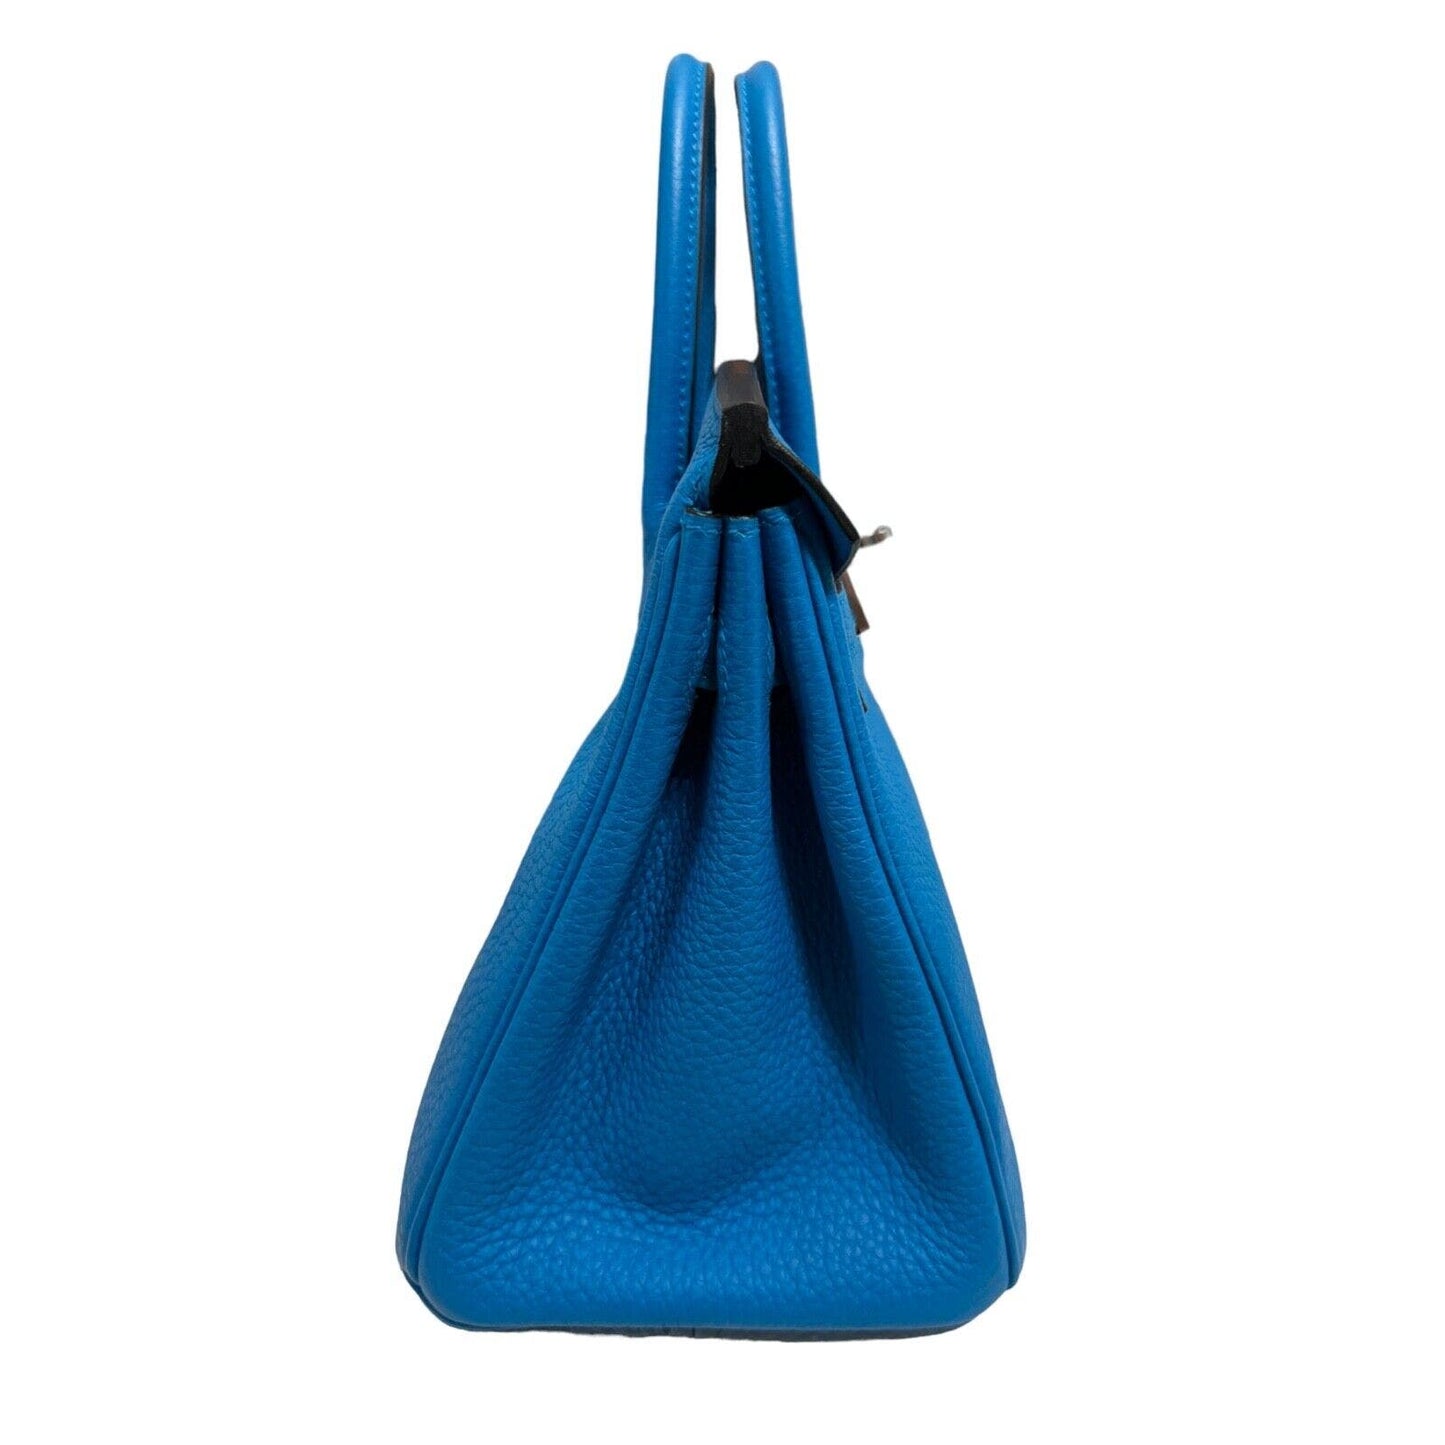 Hermes Birkin 25 Blue Zanzibar Togo Leather PalladiumHardware Handbag Bag